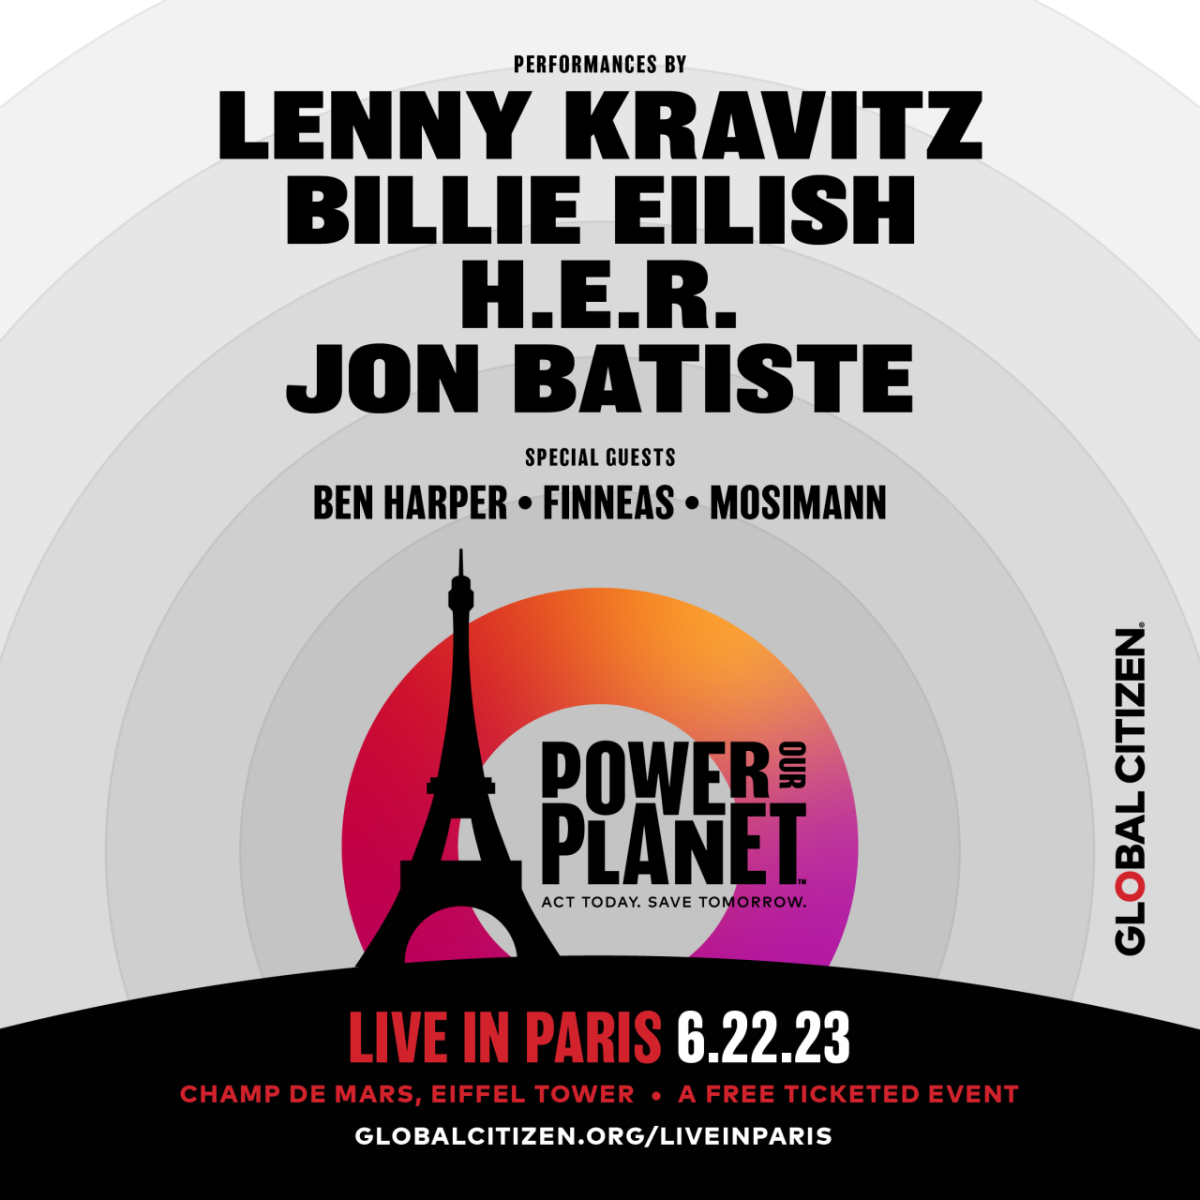 Lenny Kravitz, Billie Eilish, H.E.R., Jon Batiste, special guests Ben Harper, Finneas, Mosimann. Power our Planet Live in Paris 6.22.23